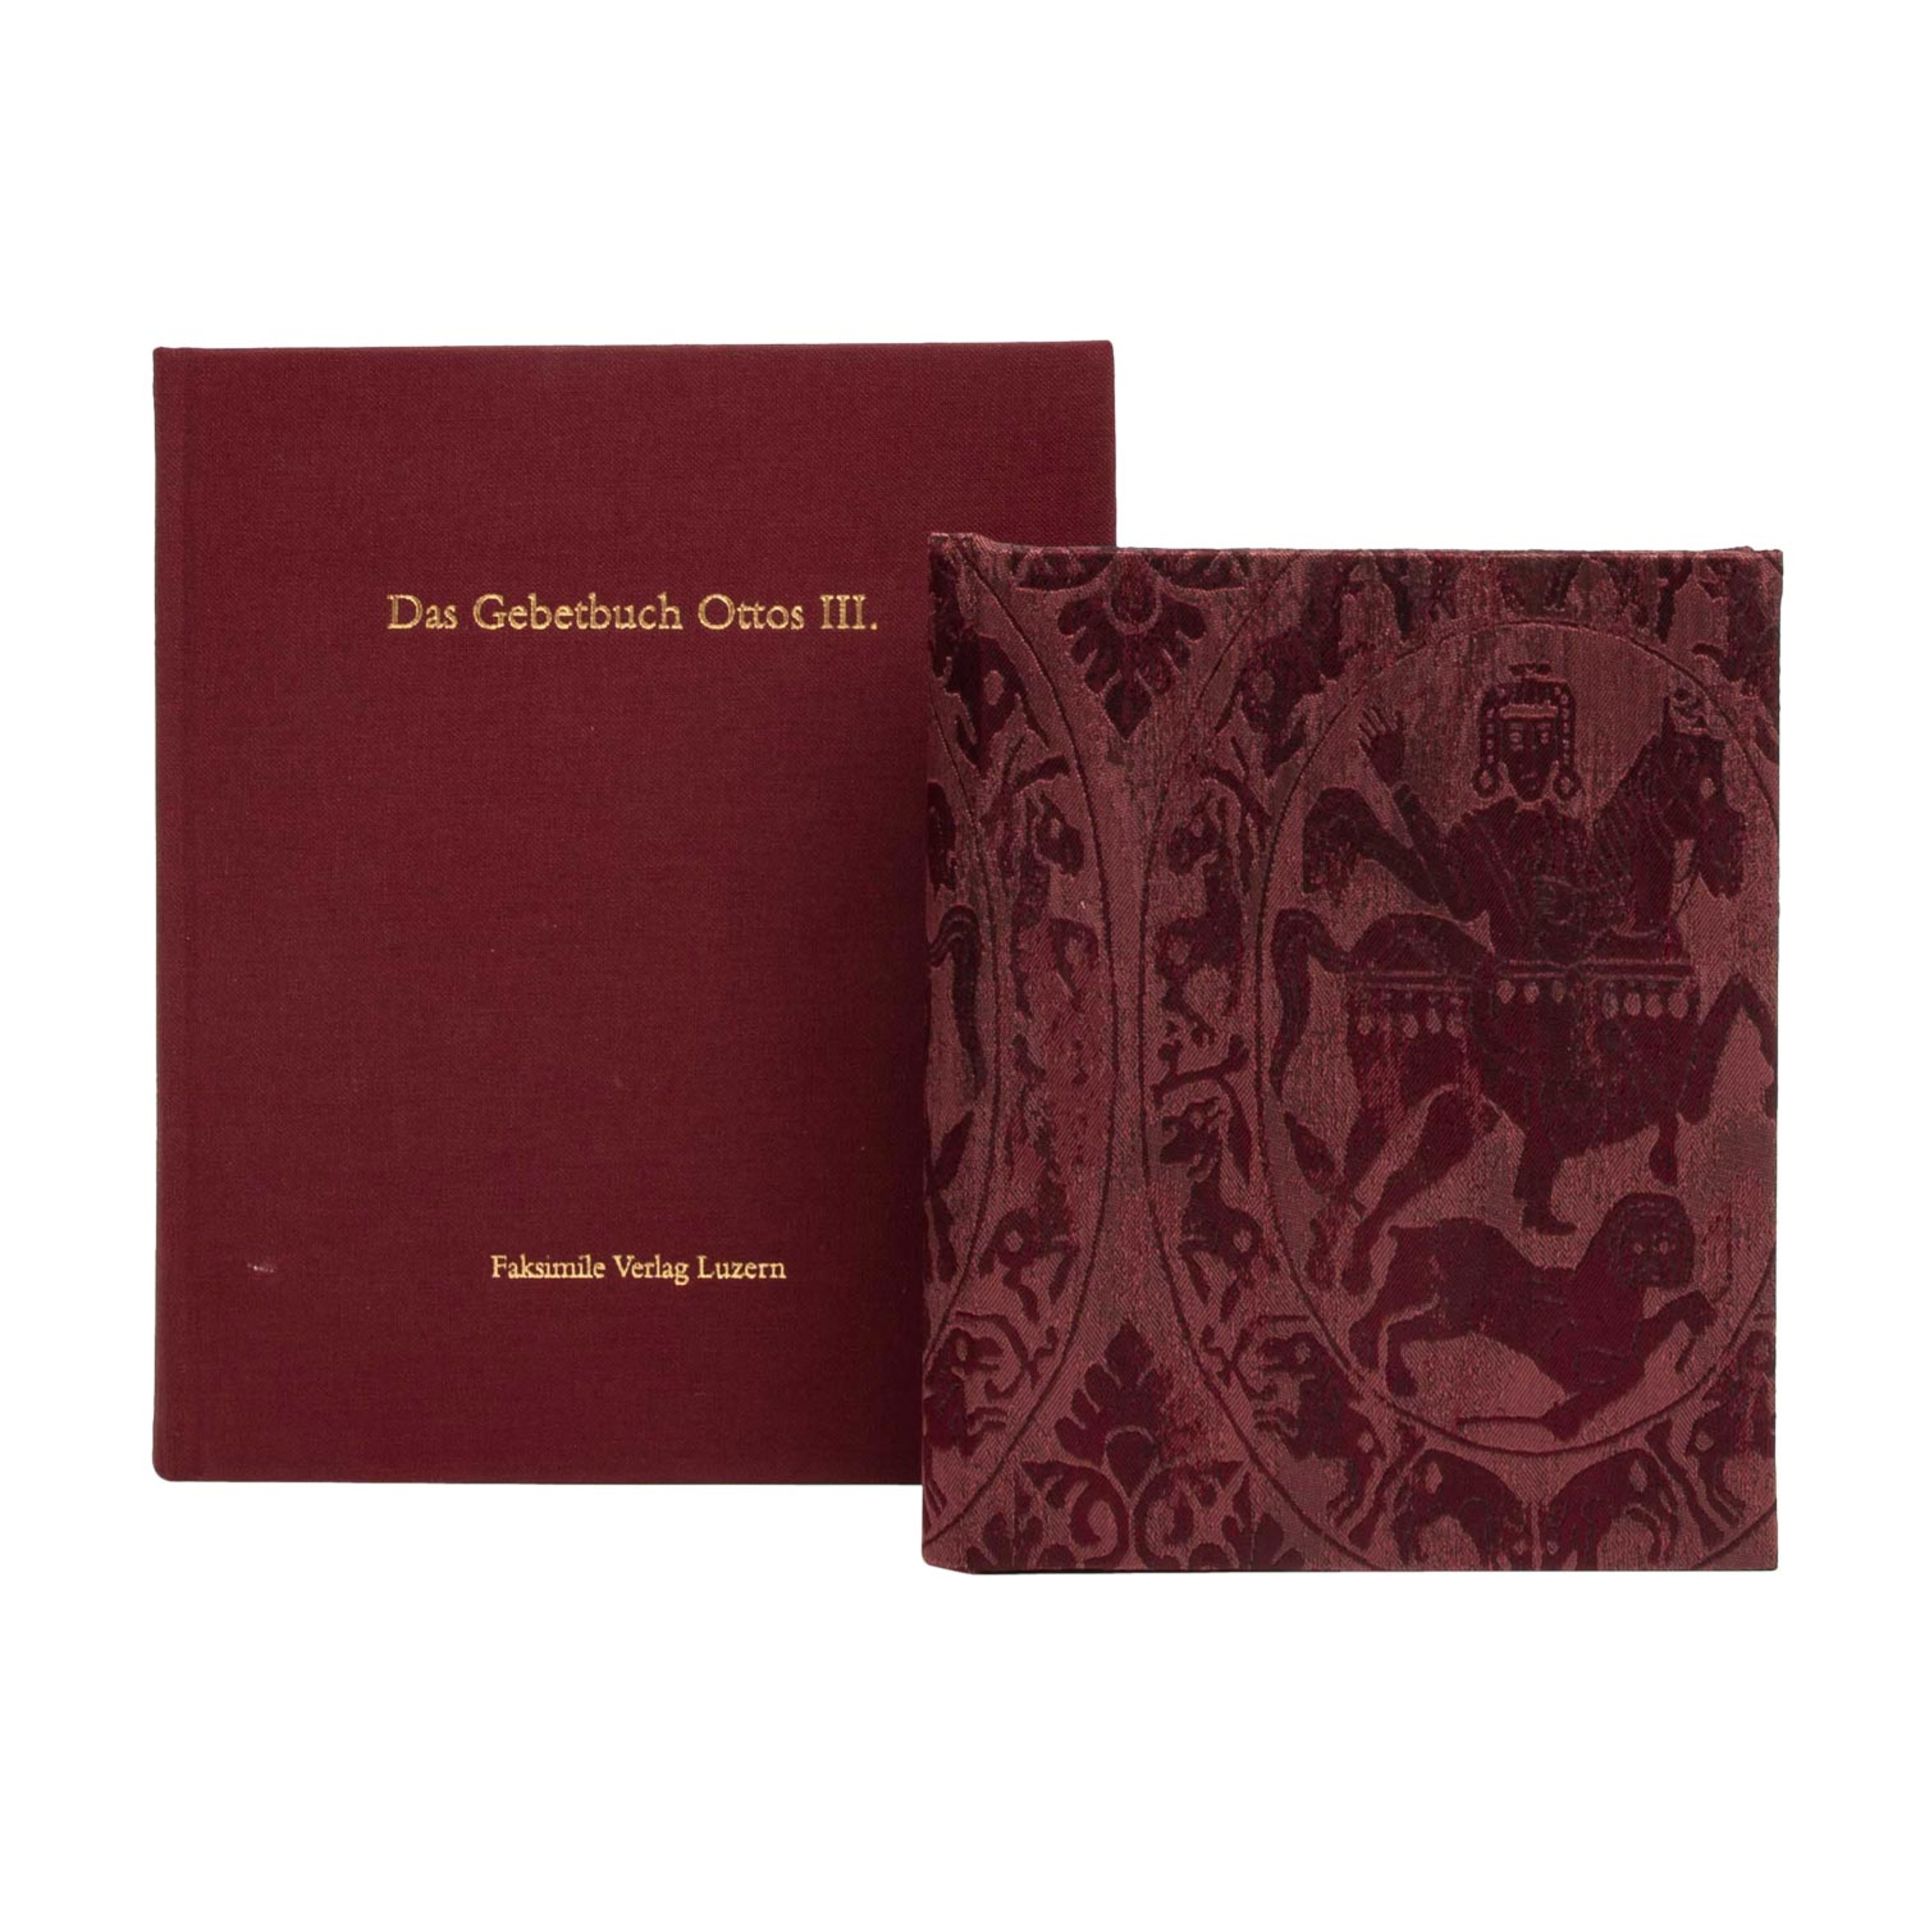 Faksimile Edition "Das Gebetbuch Otto III." - - Image 4 of 7